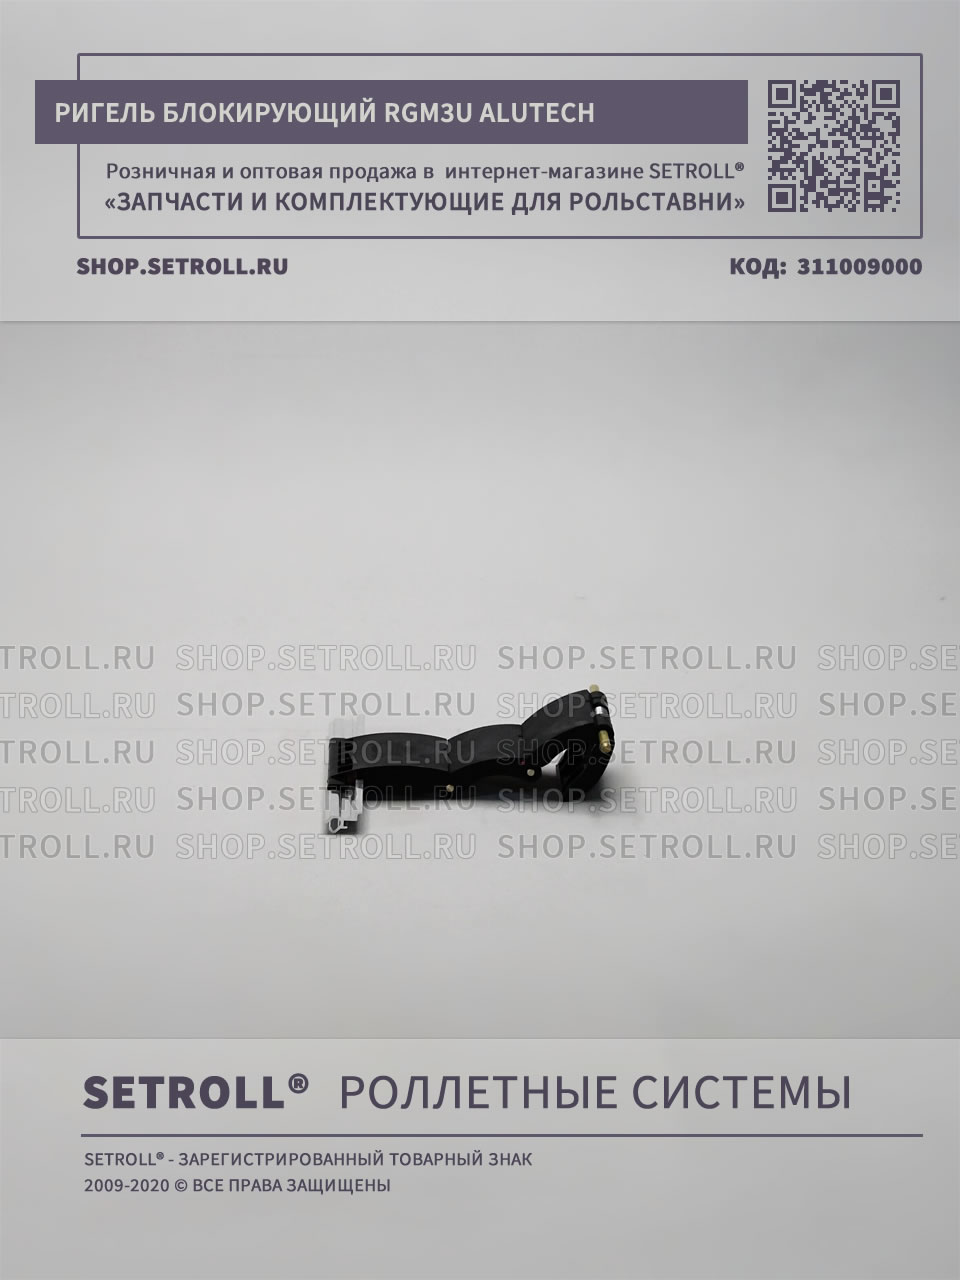 rgm3u-alutekh-profile-shop.setroll.ru